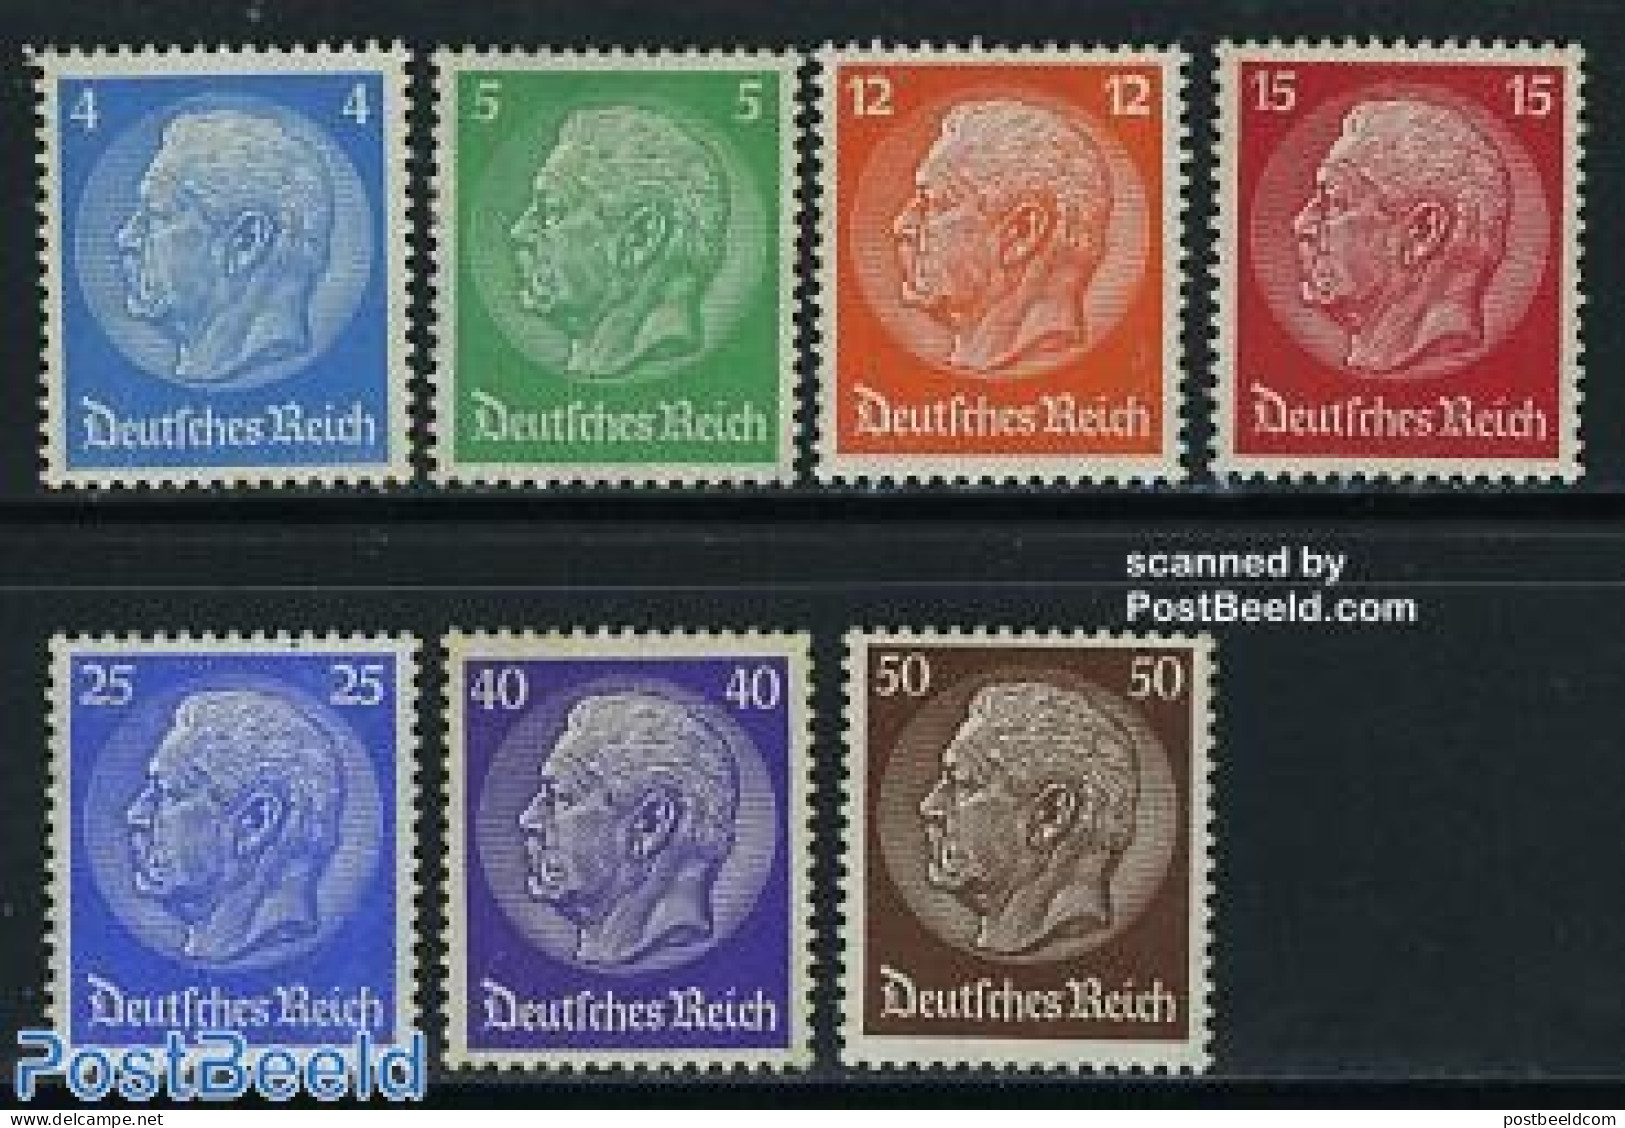 Germany, Empire 1932 Definitives 7v, Unused (hinged) - Unused Stamps